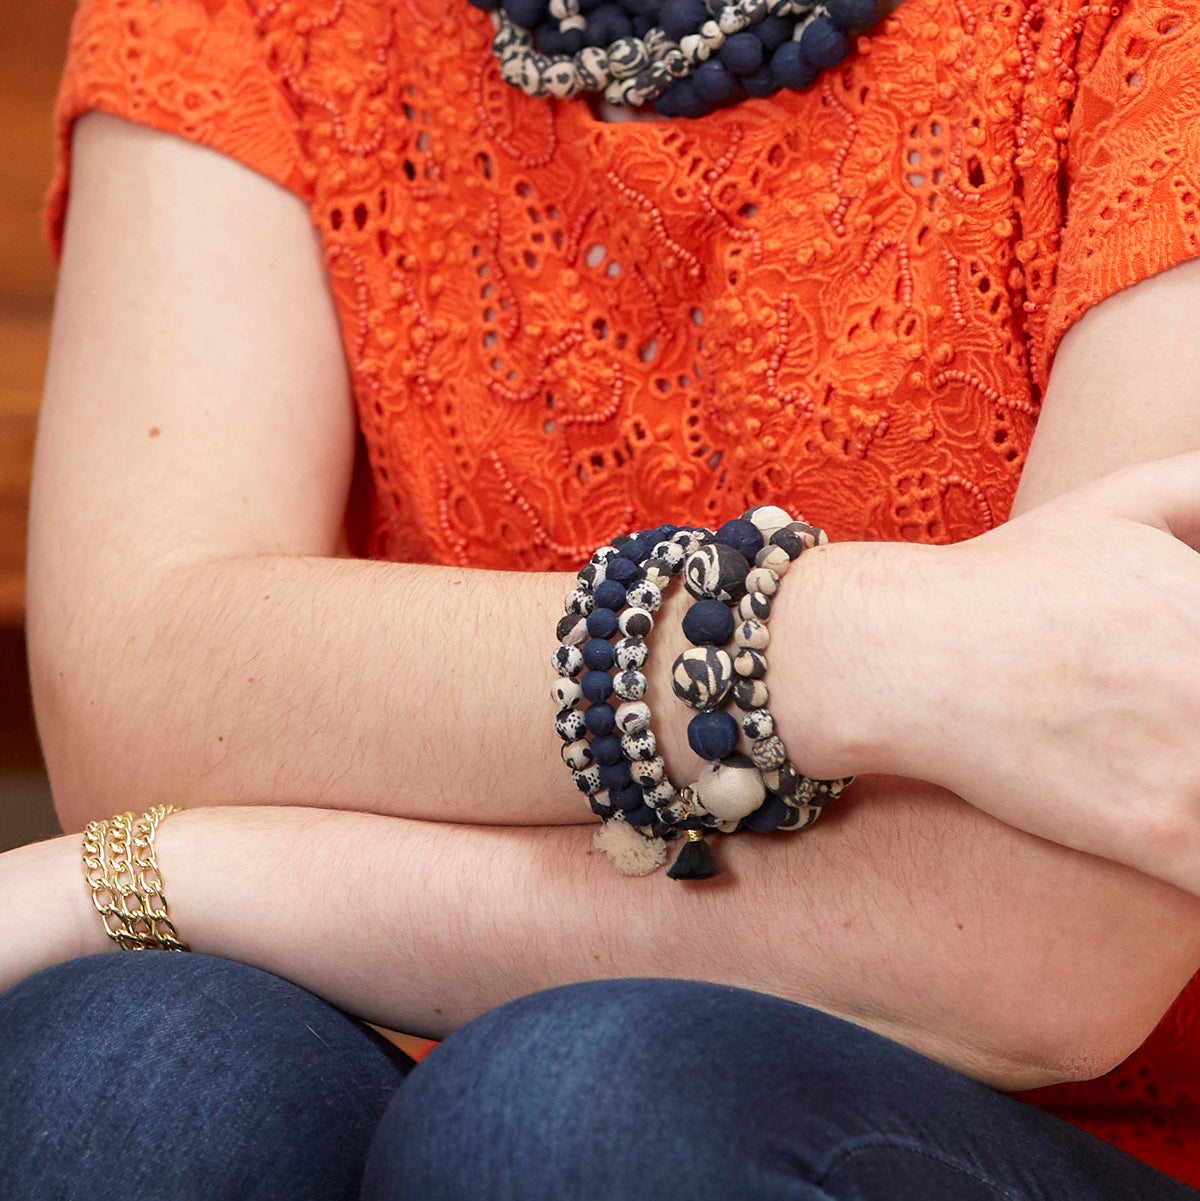 The Kantha Indigo Wrap Bracelet adorns a woman's arm.